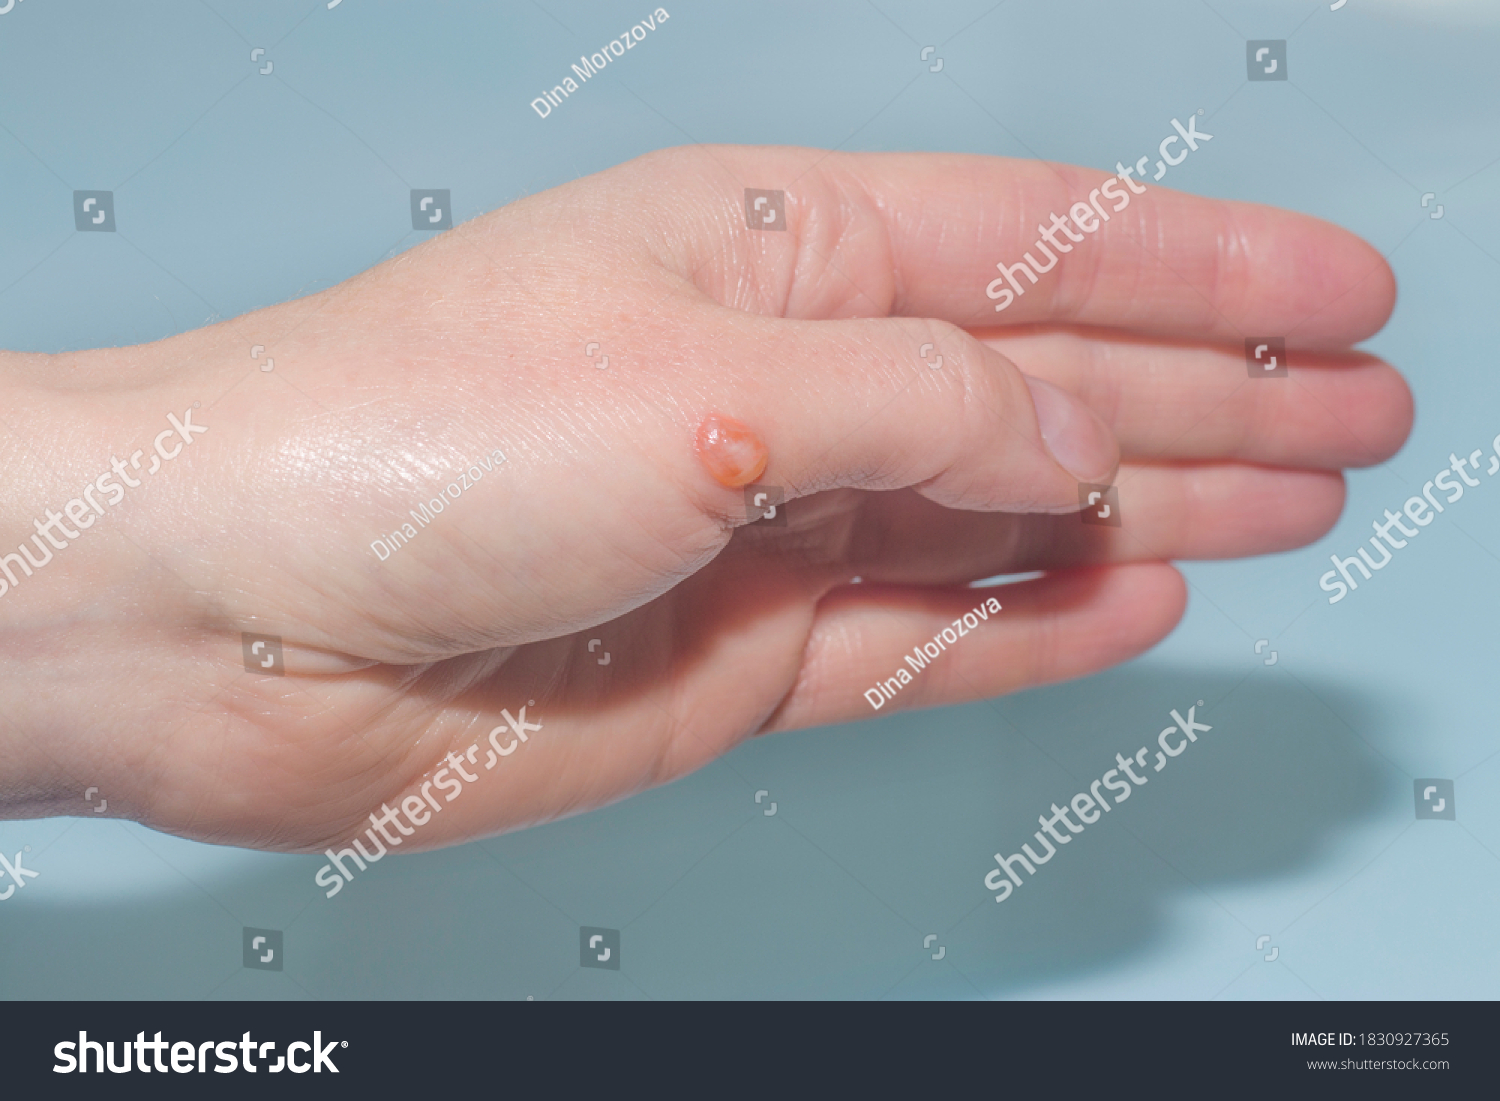 Blister On Hand After Burn Stock Photo 1830927365 Shutterstock